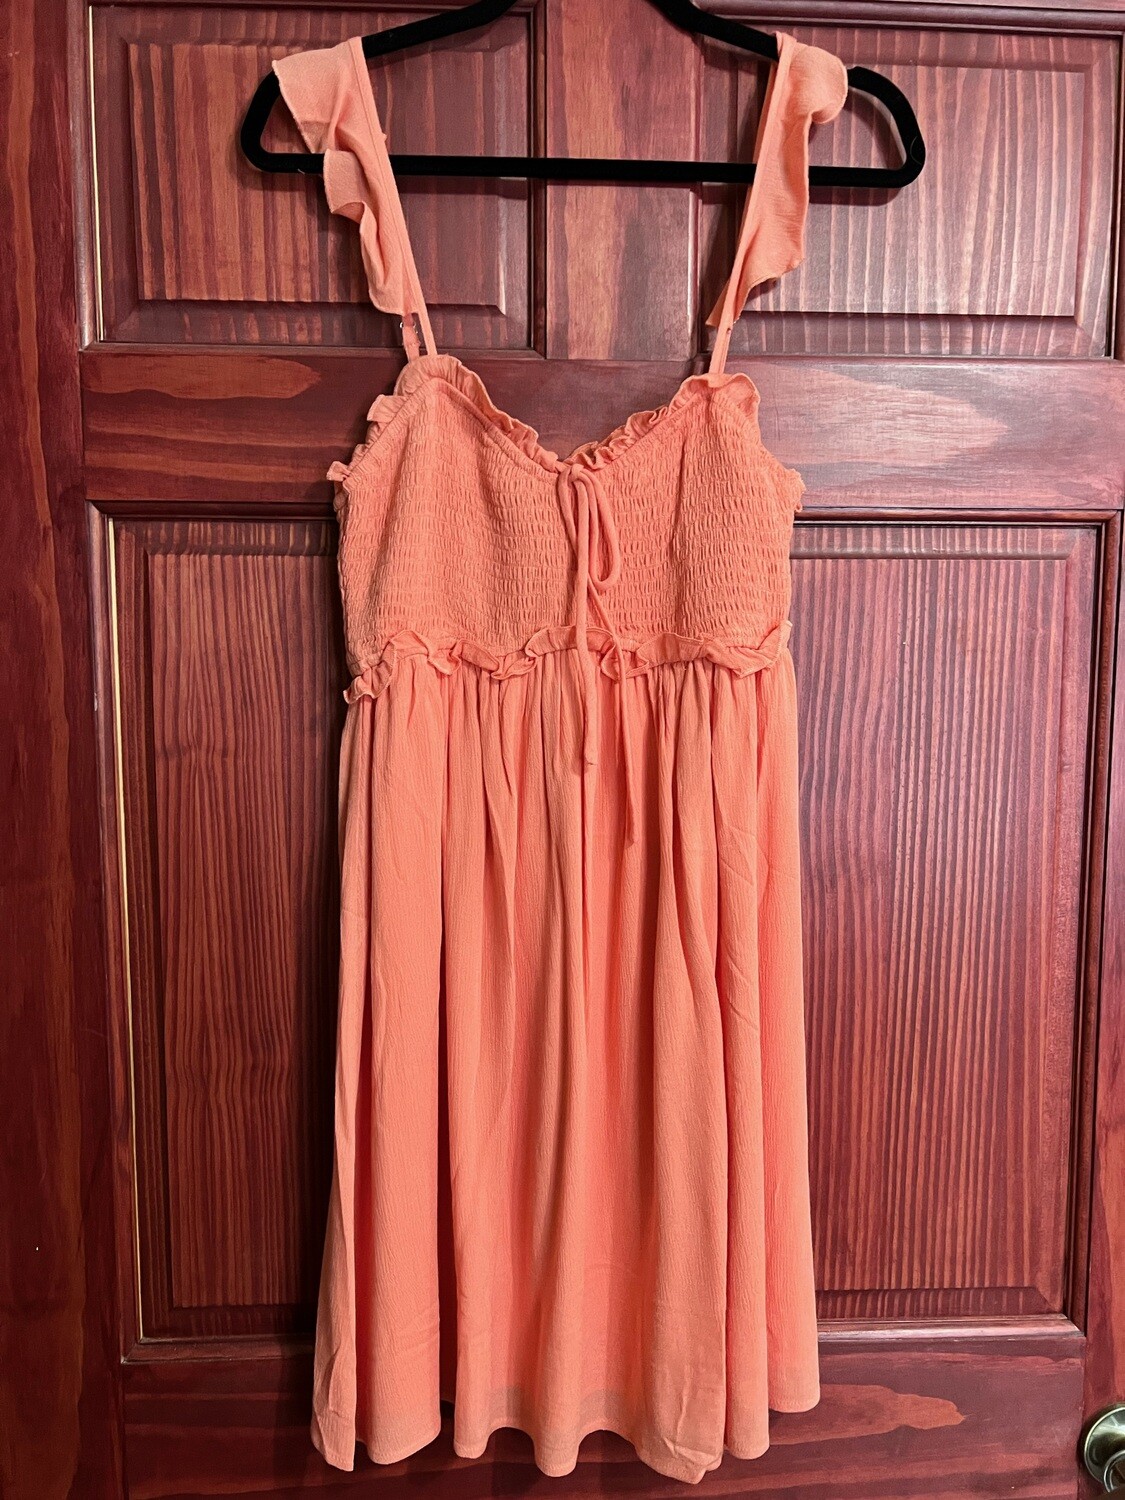 Coral Dress